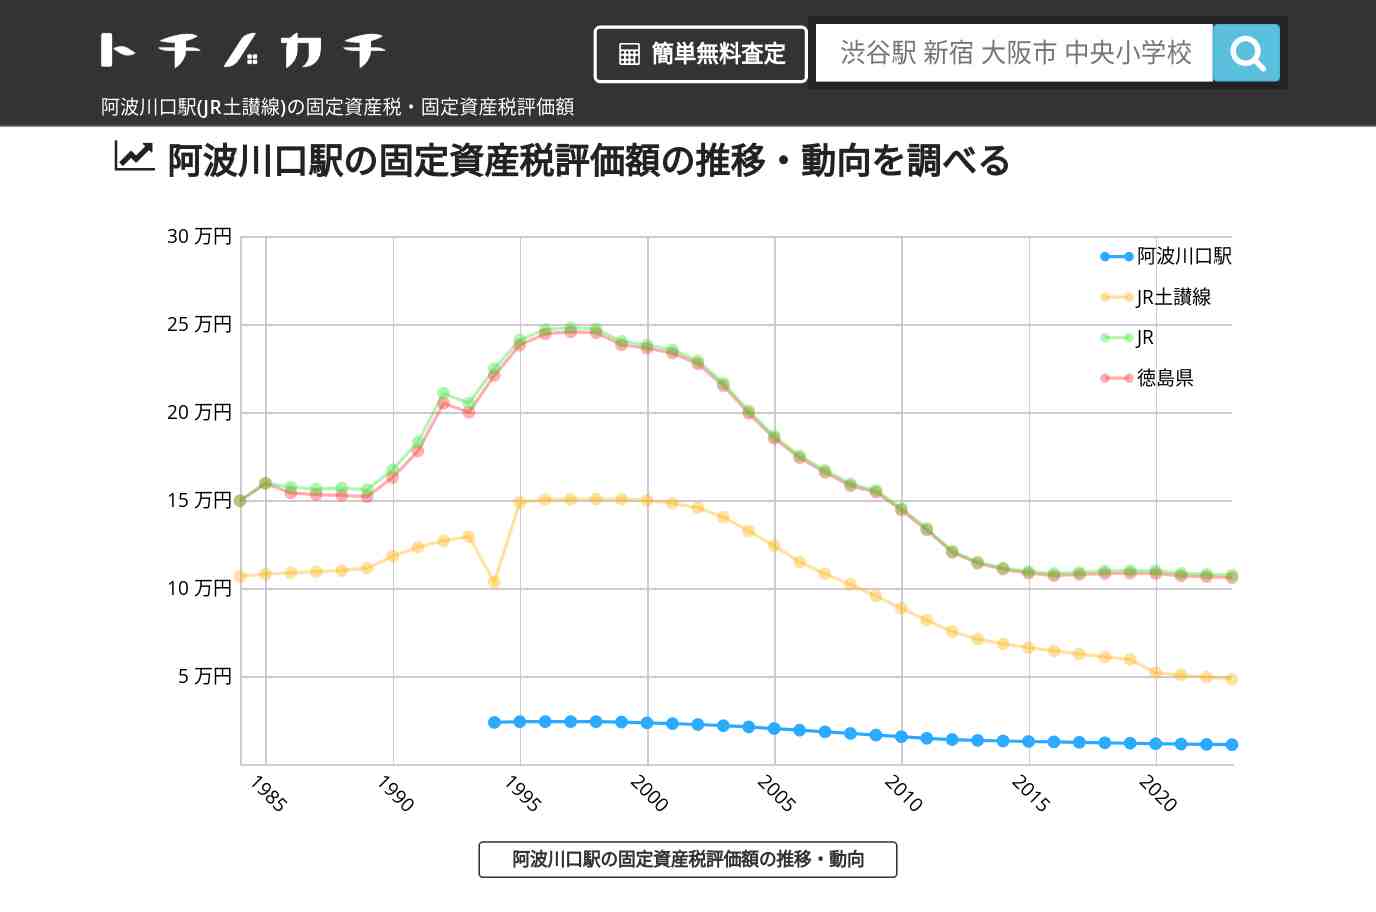 阿波川口駅(JR土讃線)の固定資産税・固定資産税評価額 | トチノカチ